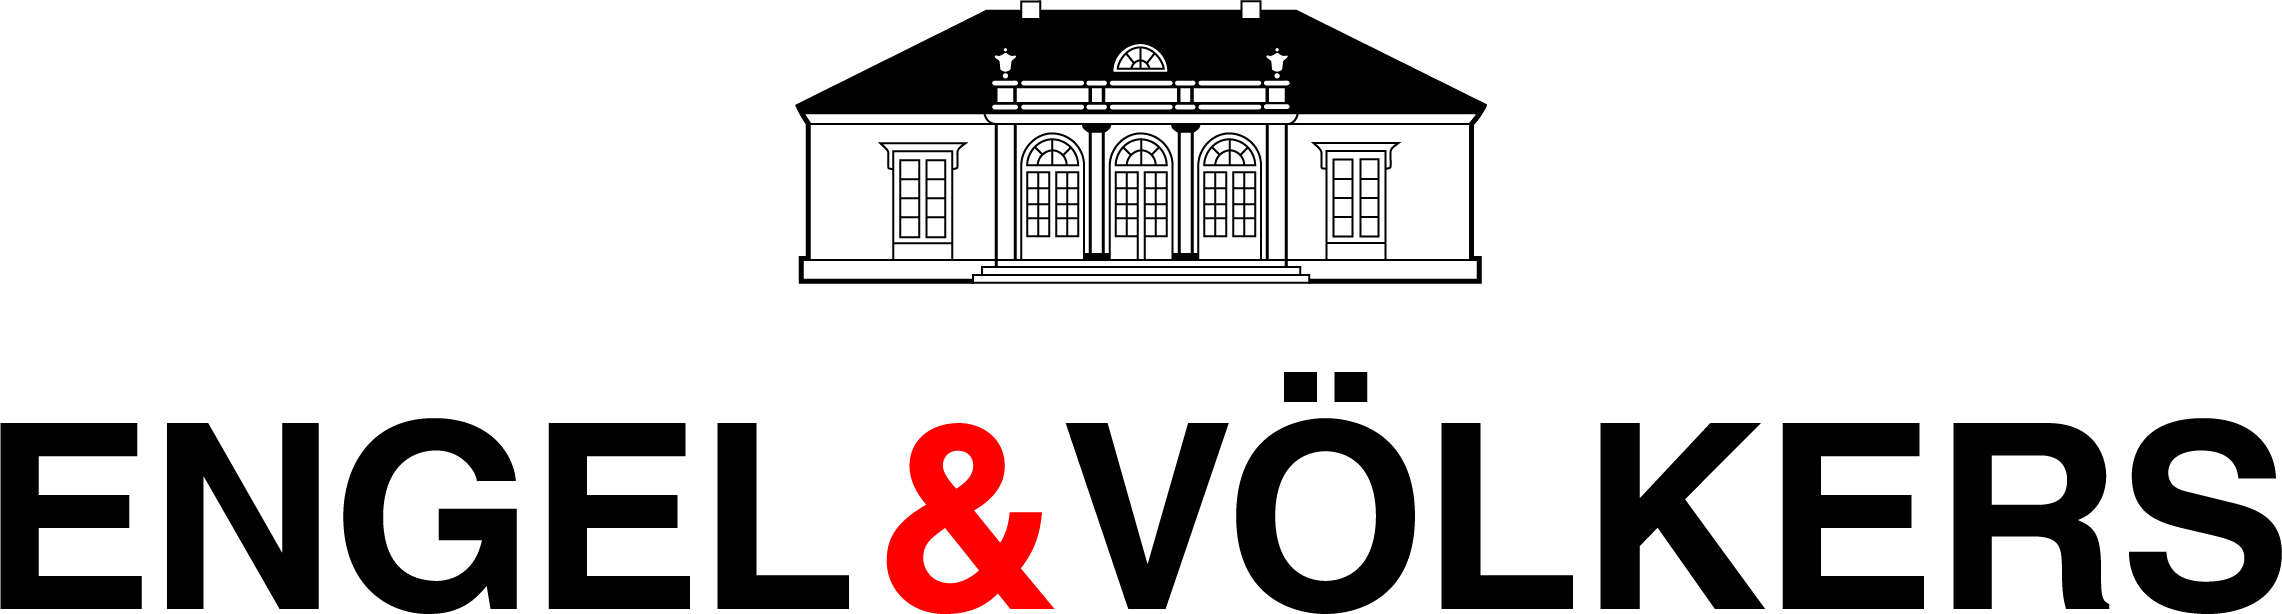 Engel & Völkers Zug Logo